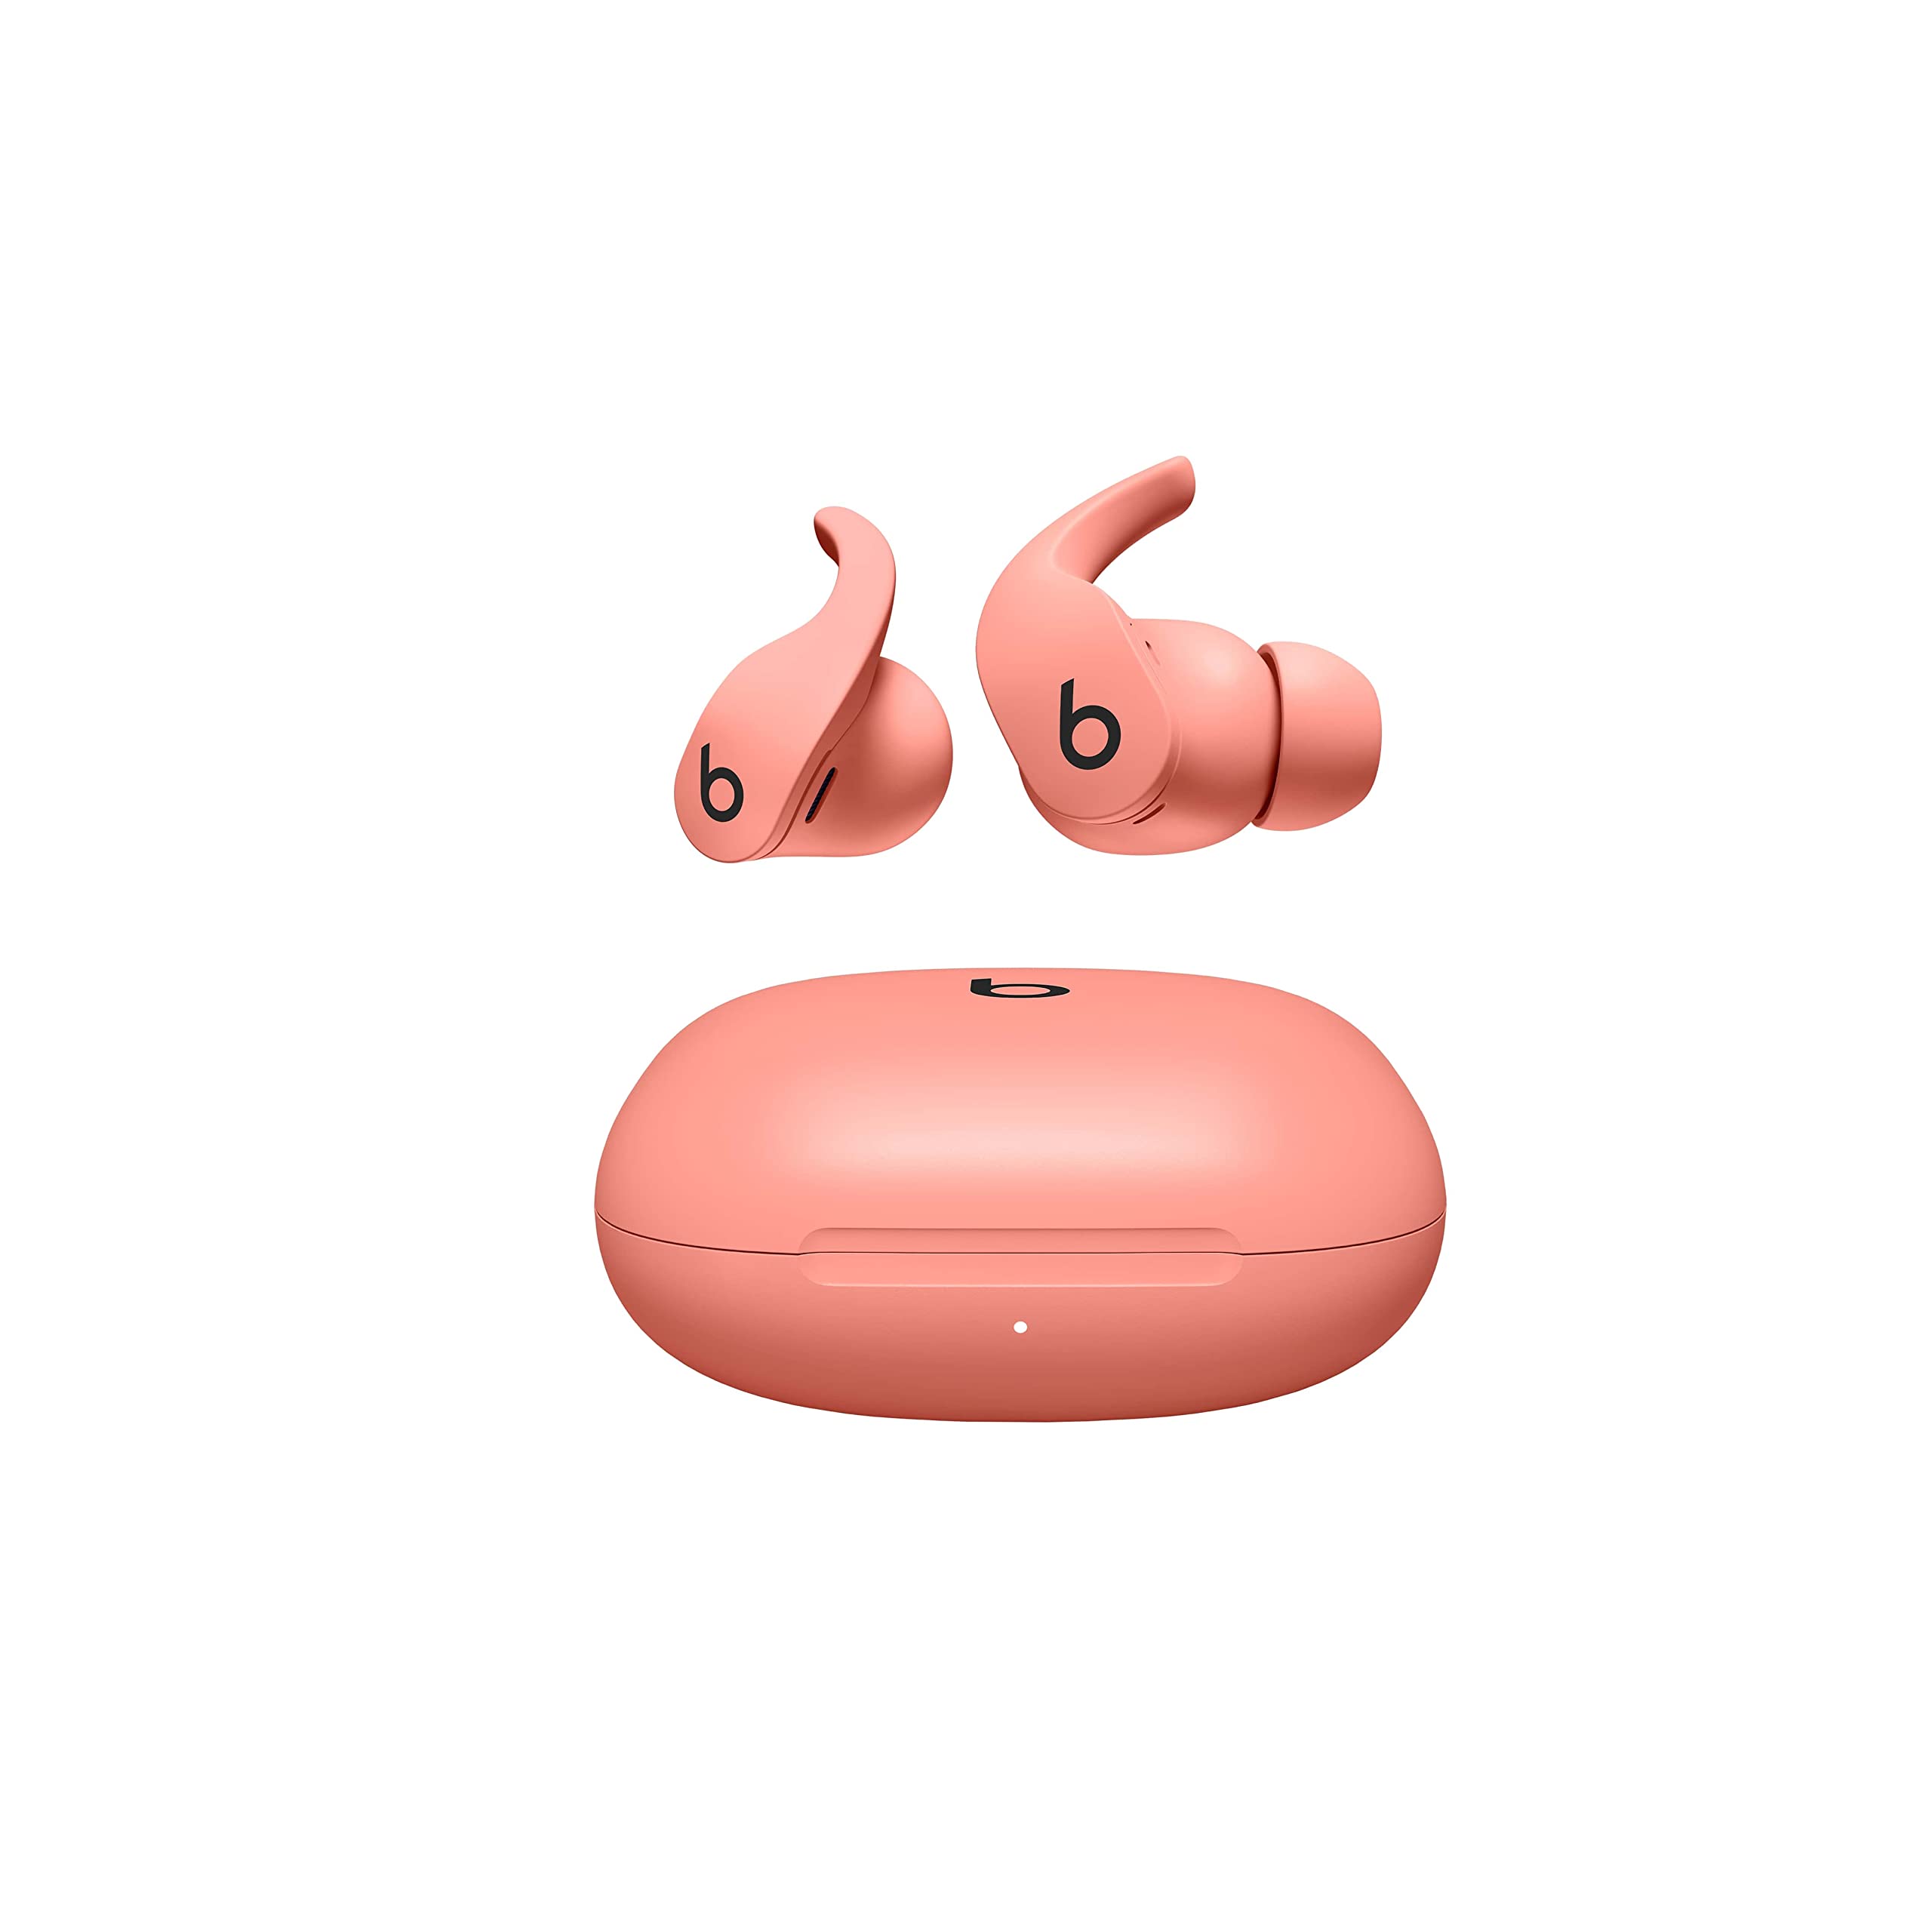 Beats Fit Pro – Komplett kabellose In-Ear Kopfhörer – Aktives Noise-Cancelling, Kompatibel mit Apple & Android, erstklassige Bluetooth®-Technologie, integriertes Mikrofon – Korallenpink